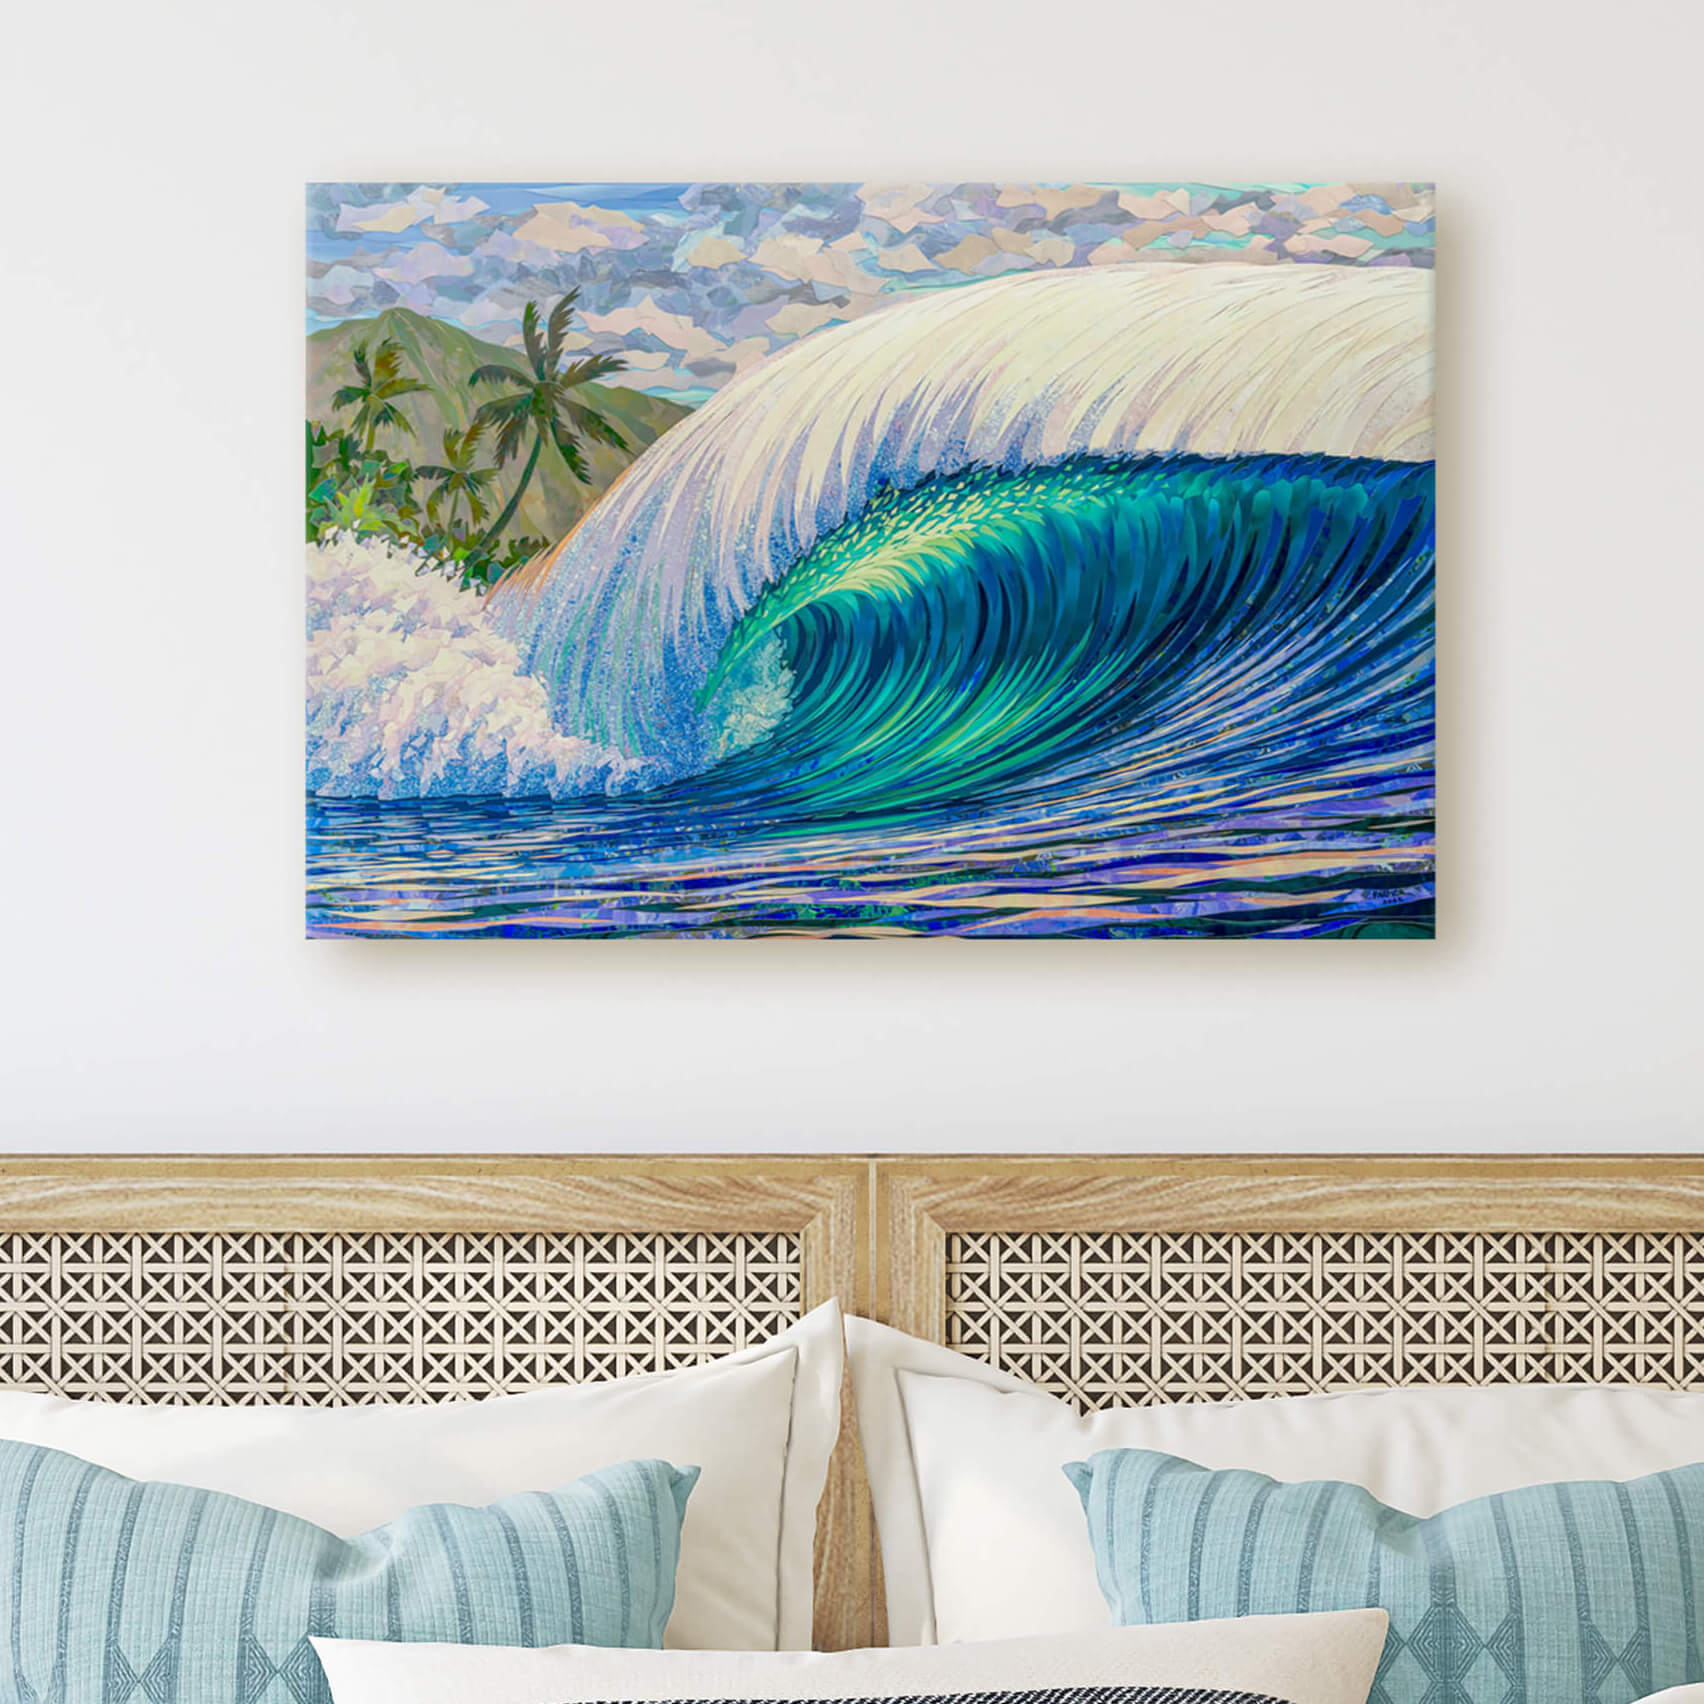 Patrick Parker Maui Wave canvas art print on coastal bedroom wall